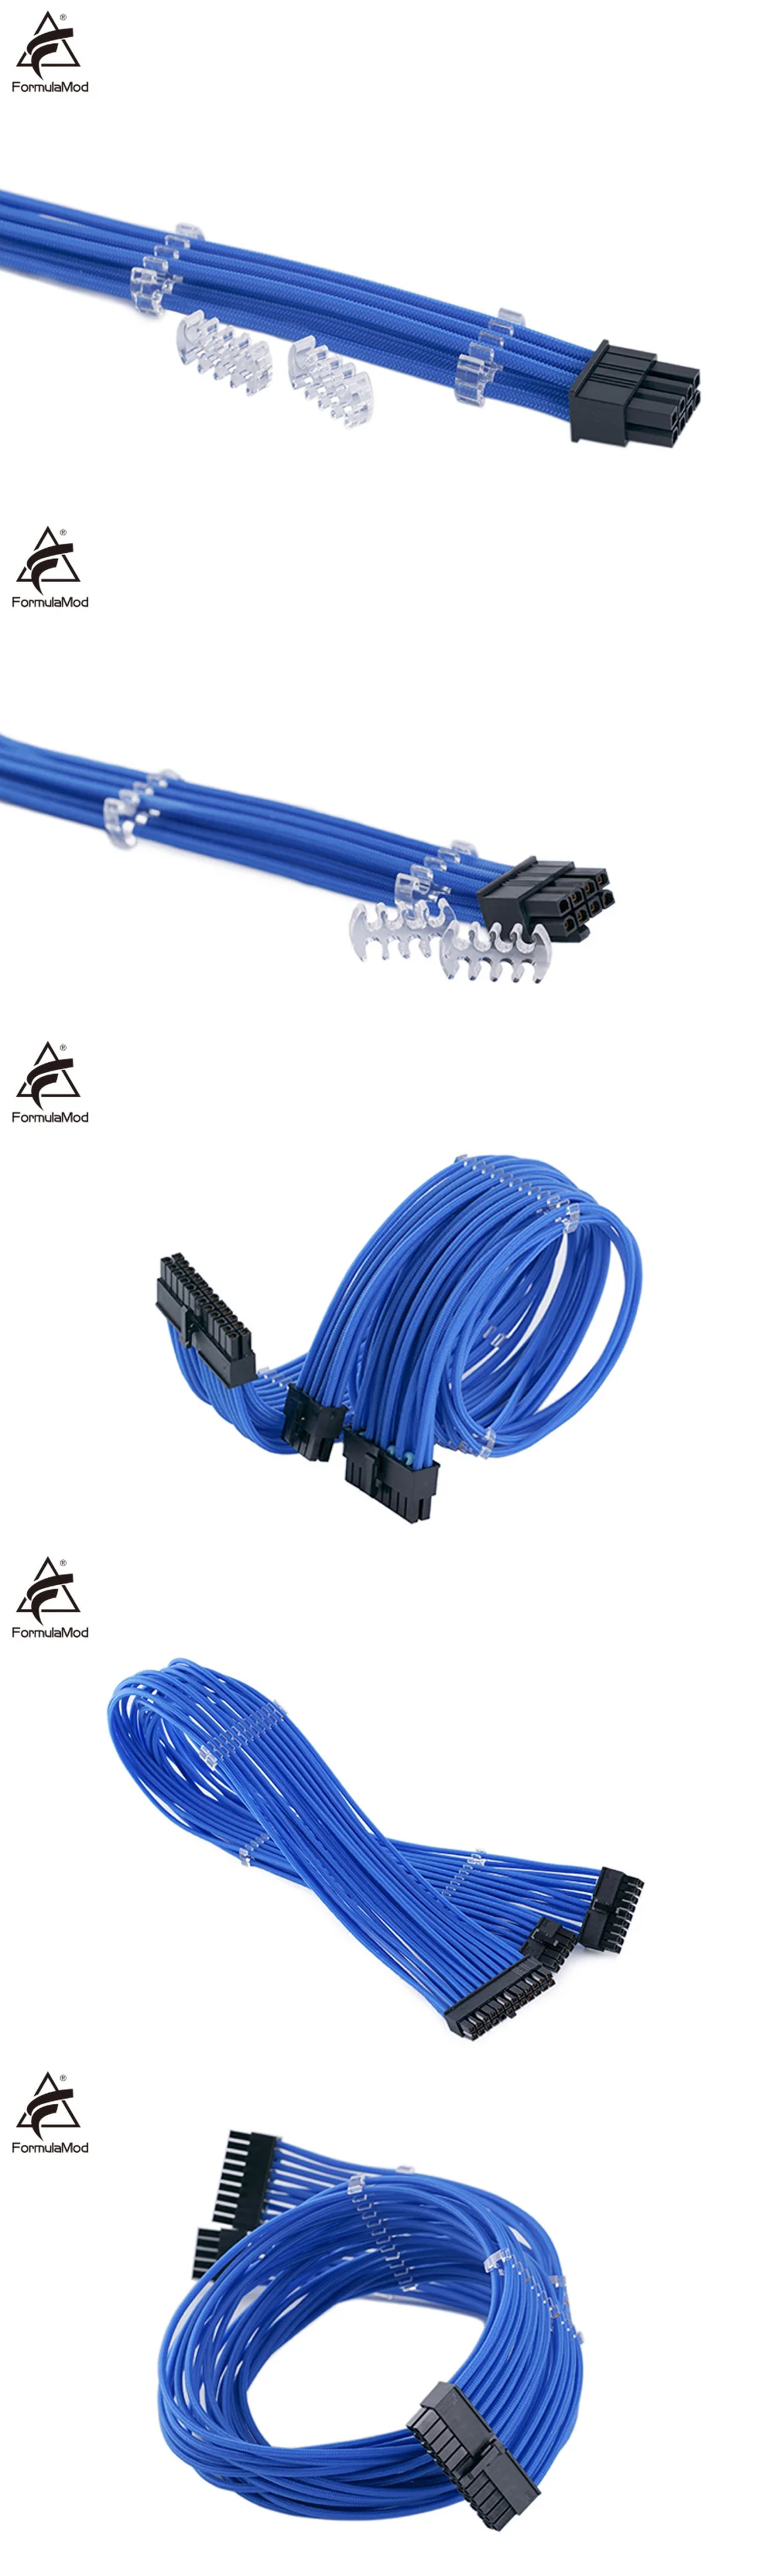 FormulaMod ASUS/Seasonic/Antec Fully Modular PSU Cable Kit, 18AWG Sleeved, Kit For ASUS/Seasonic/Antec Modular PSU, Fm-BZXZ [Please check compatibility]  